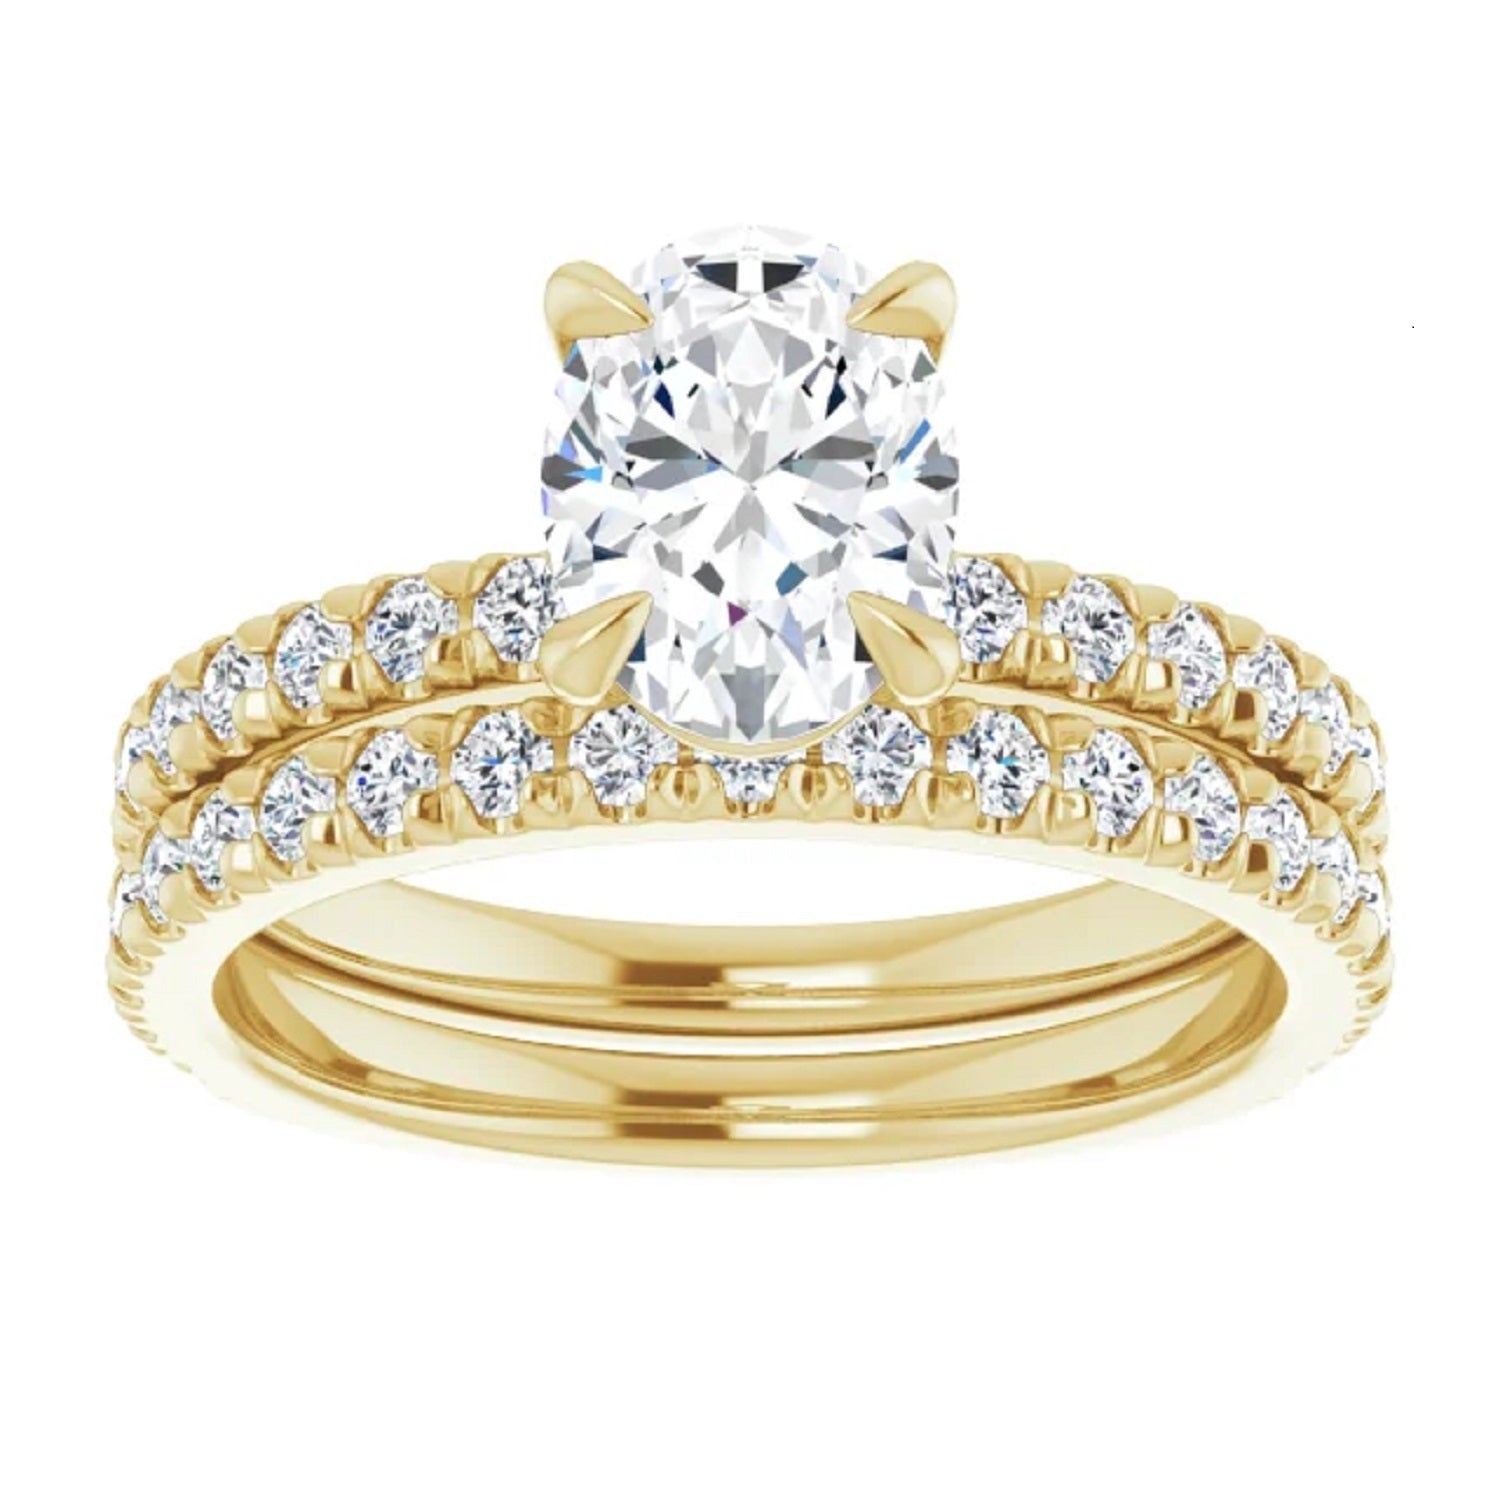 1 Carat Oval Diamond Engagement Ring, Certified Lab Diamond Ring